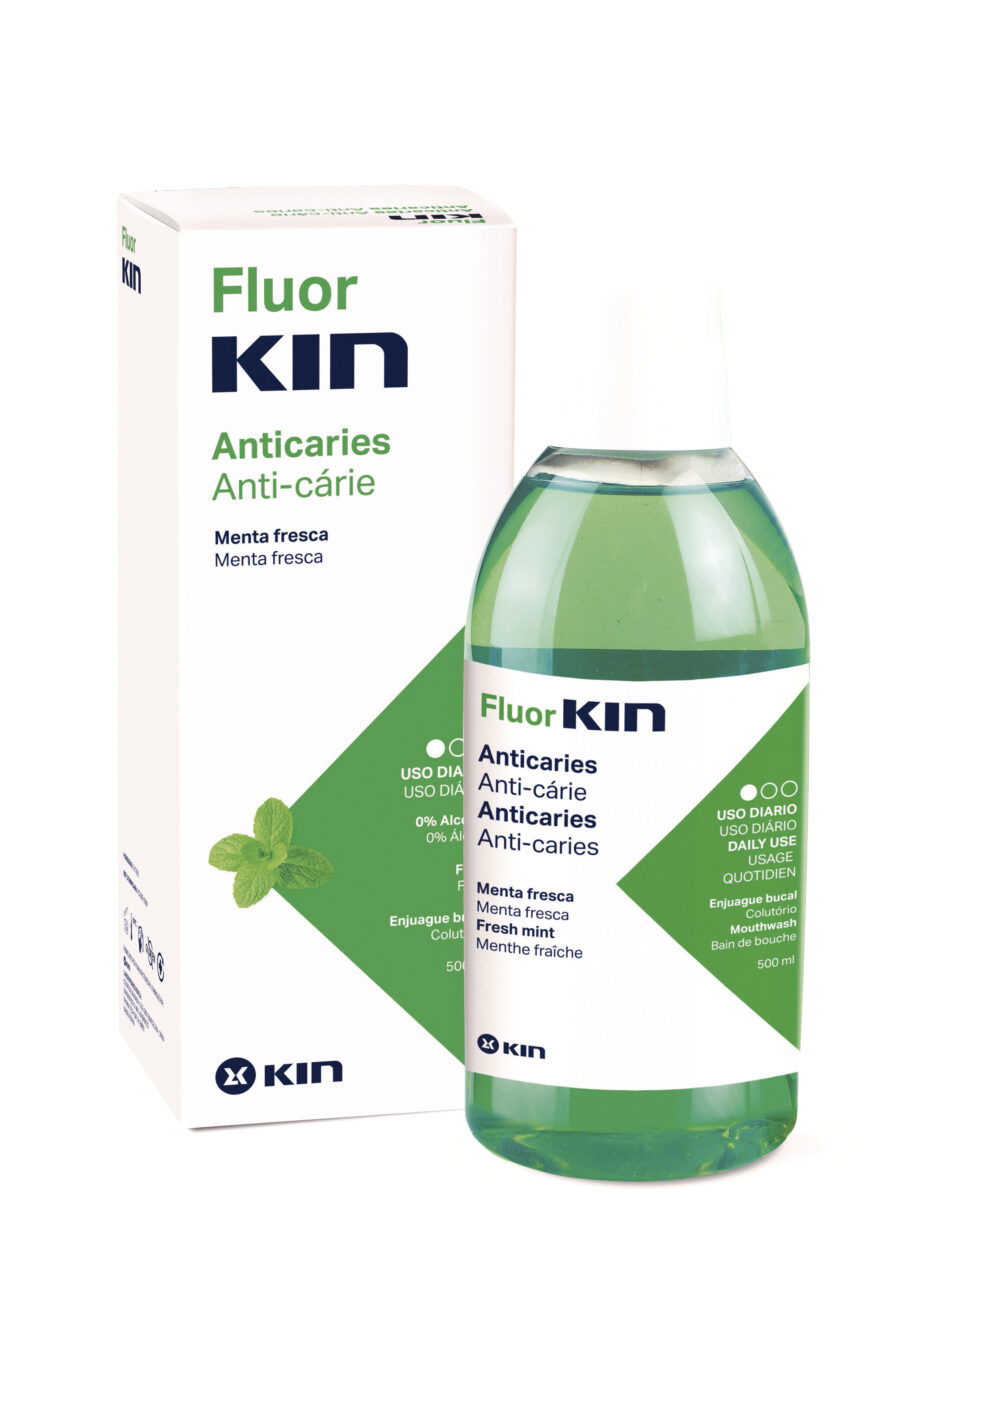 Fluor KIN Anticaries Menta fresca 500ml